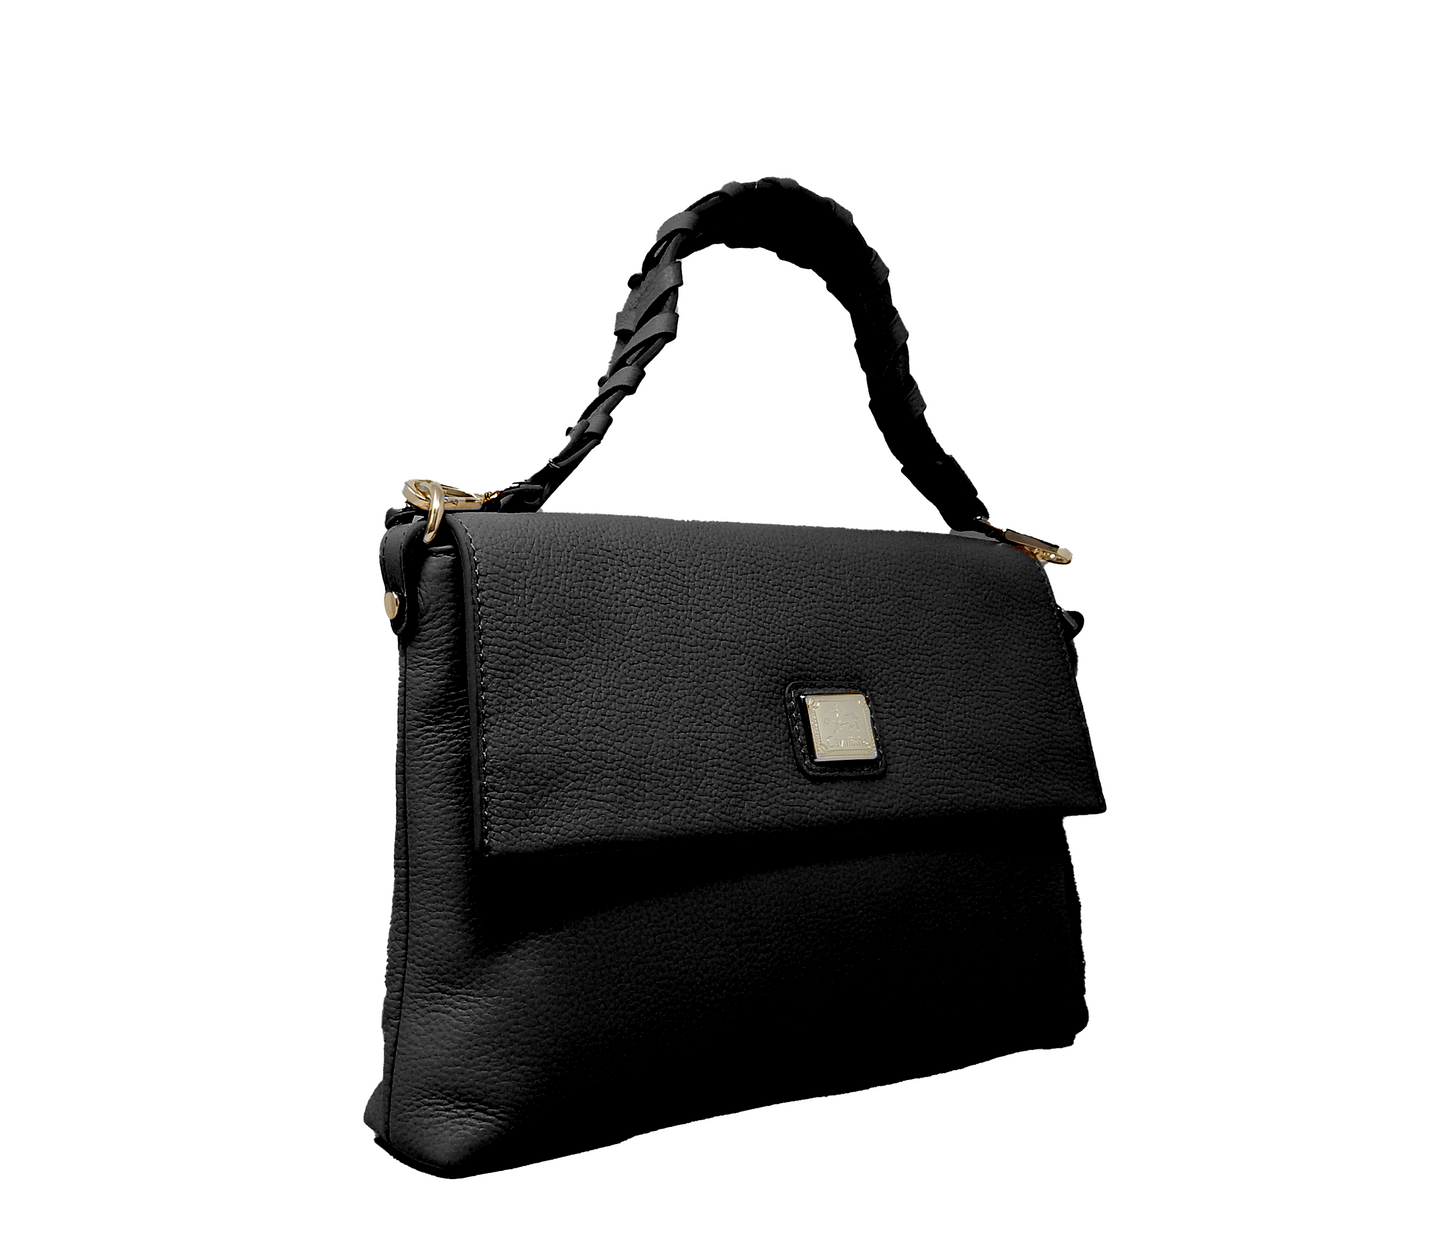 Cavalinho Infinity 3 in 1: Clutch, Handbag or Crossbody Bag - Black - 18230458_01_a